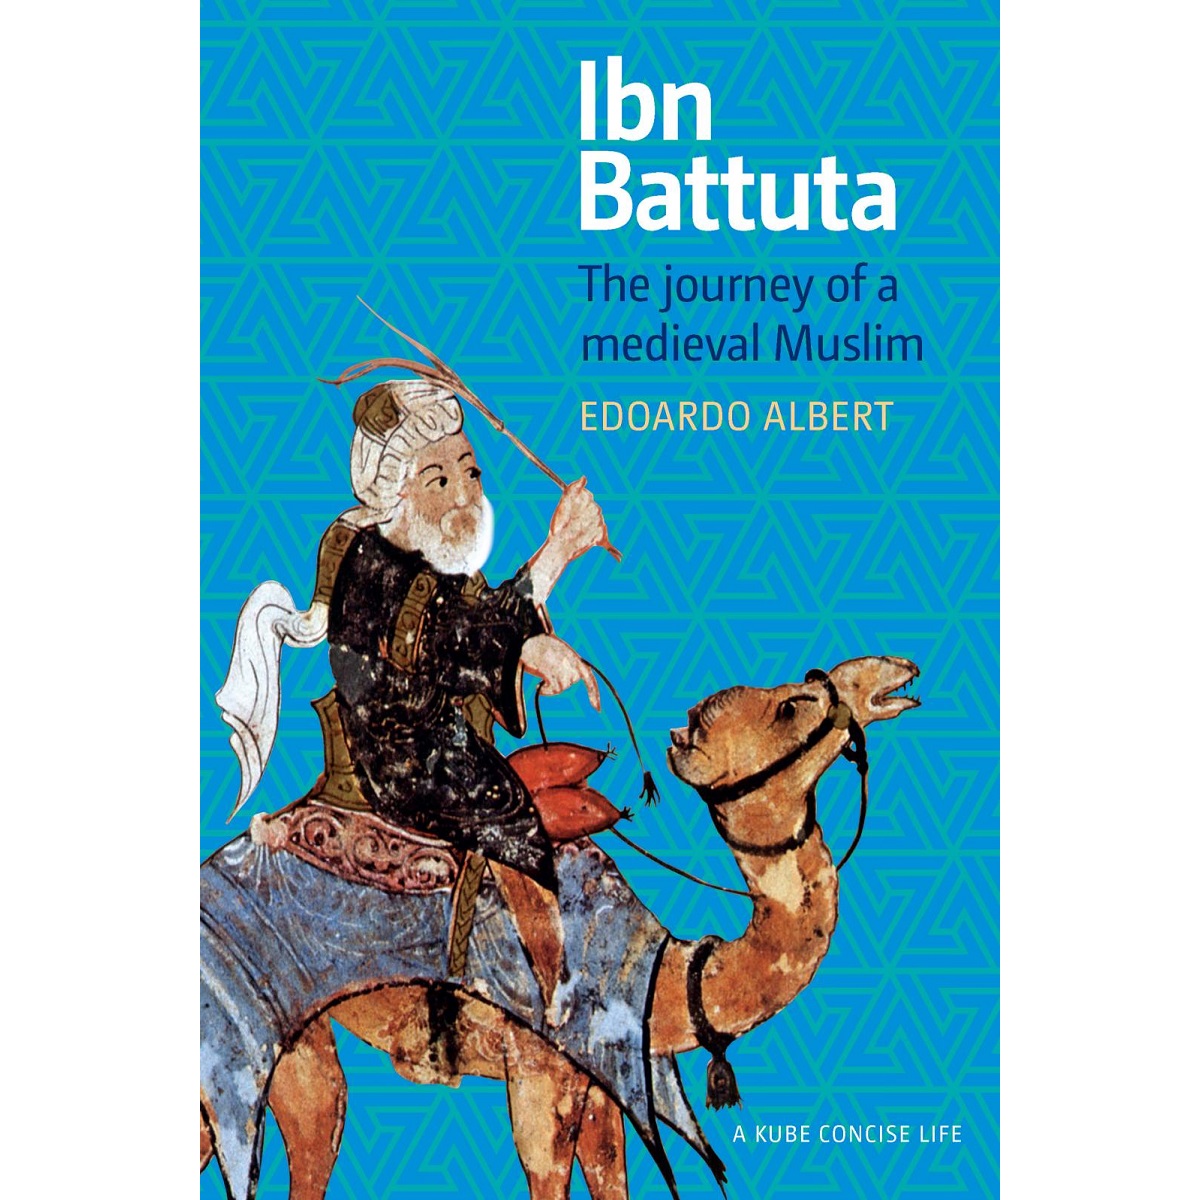 Ibn Battuta: The Journey of a Medieval Muslim by Edoardo Albert